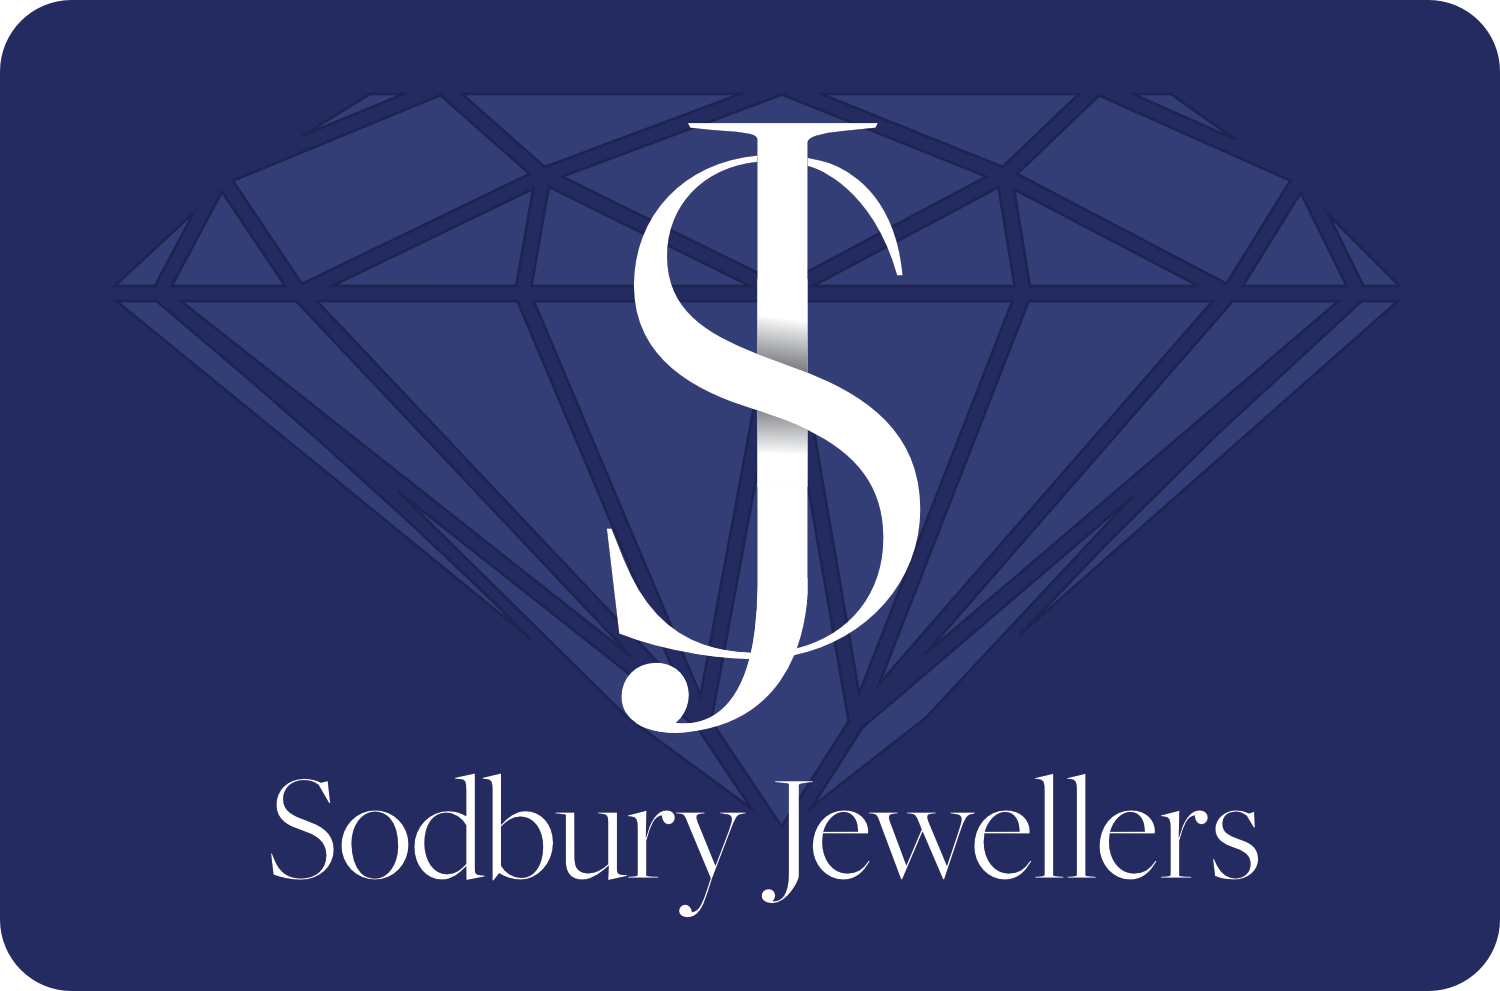 Sodbury Jewellers